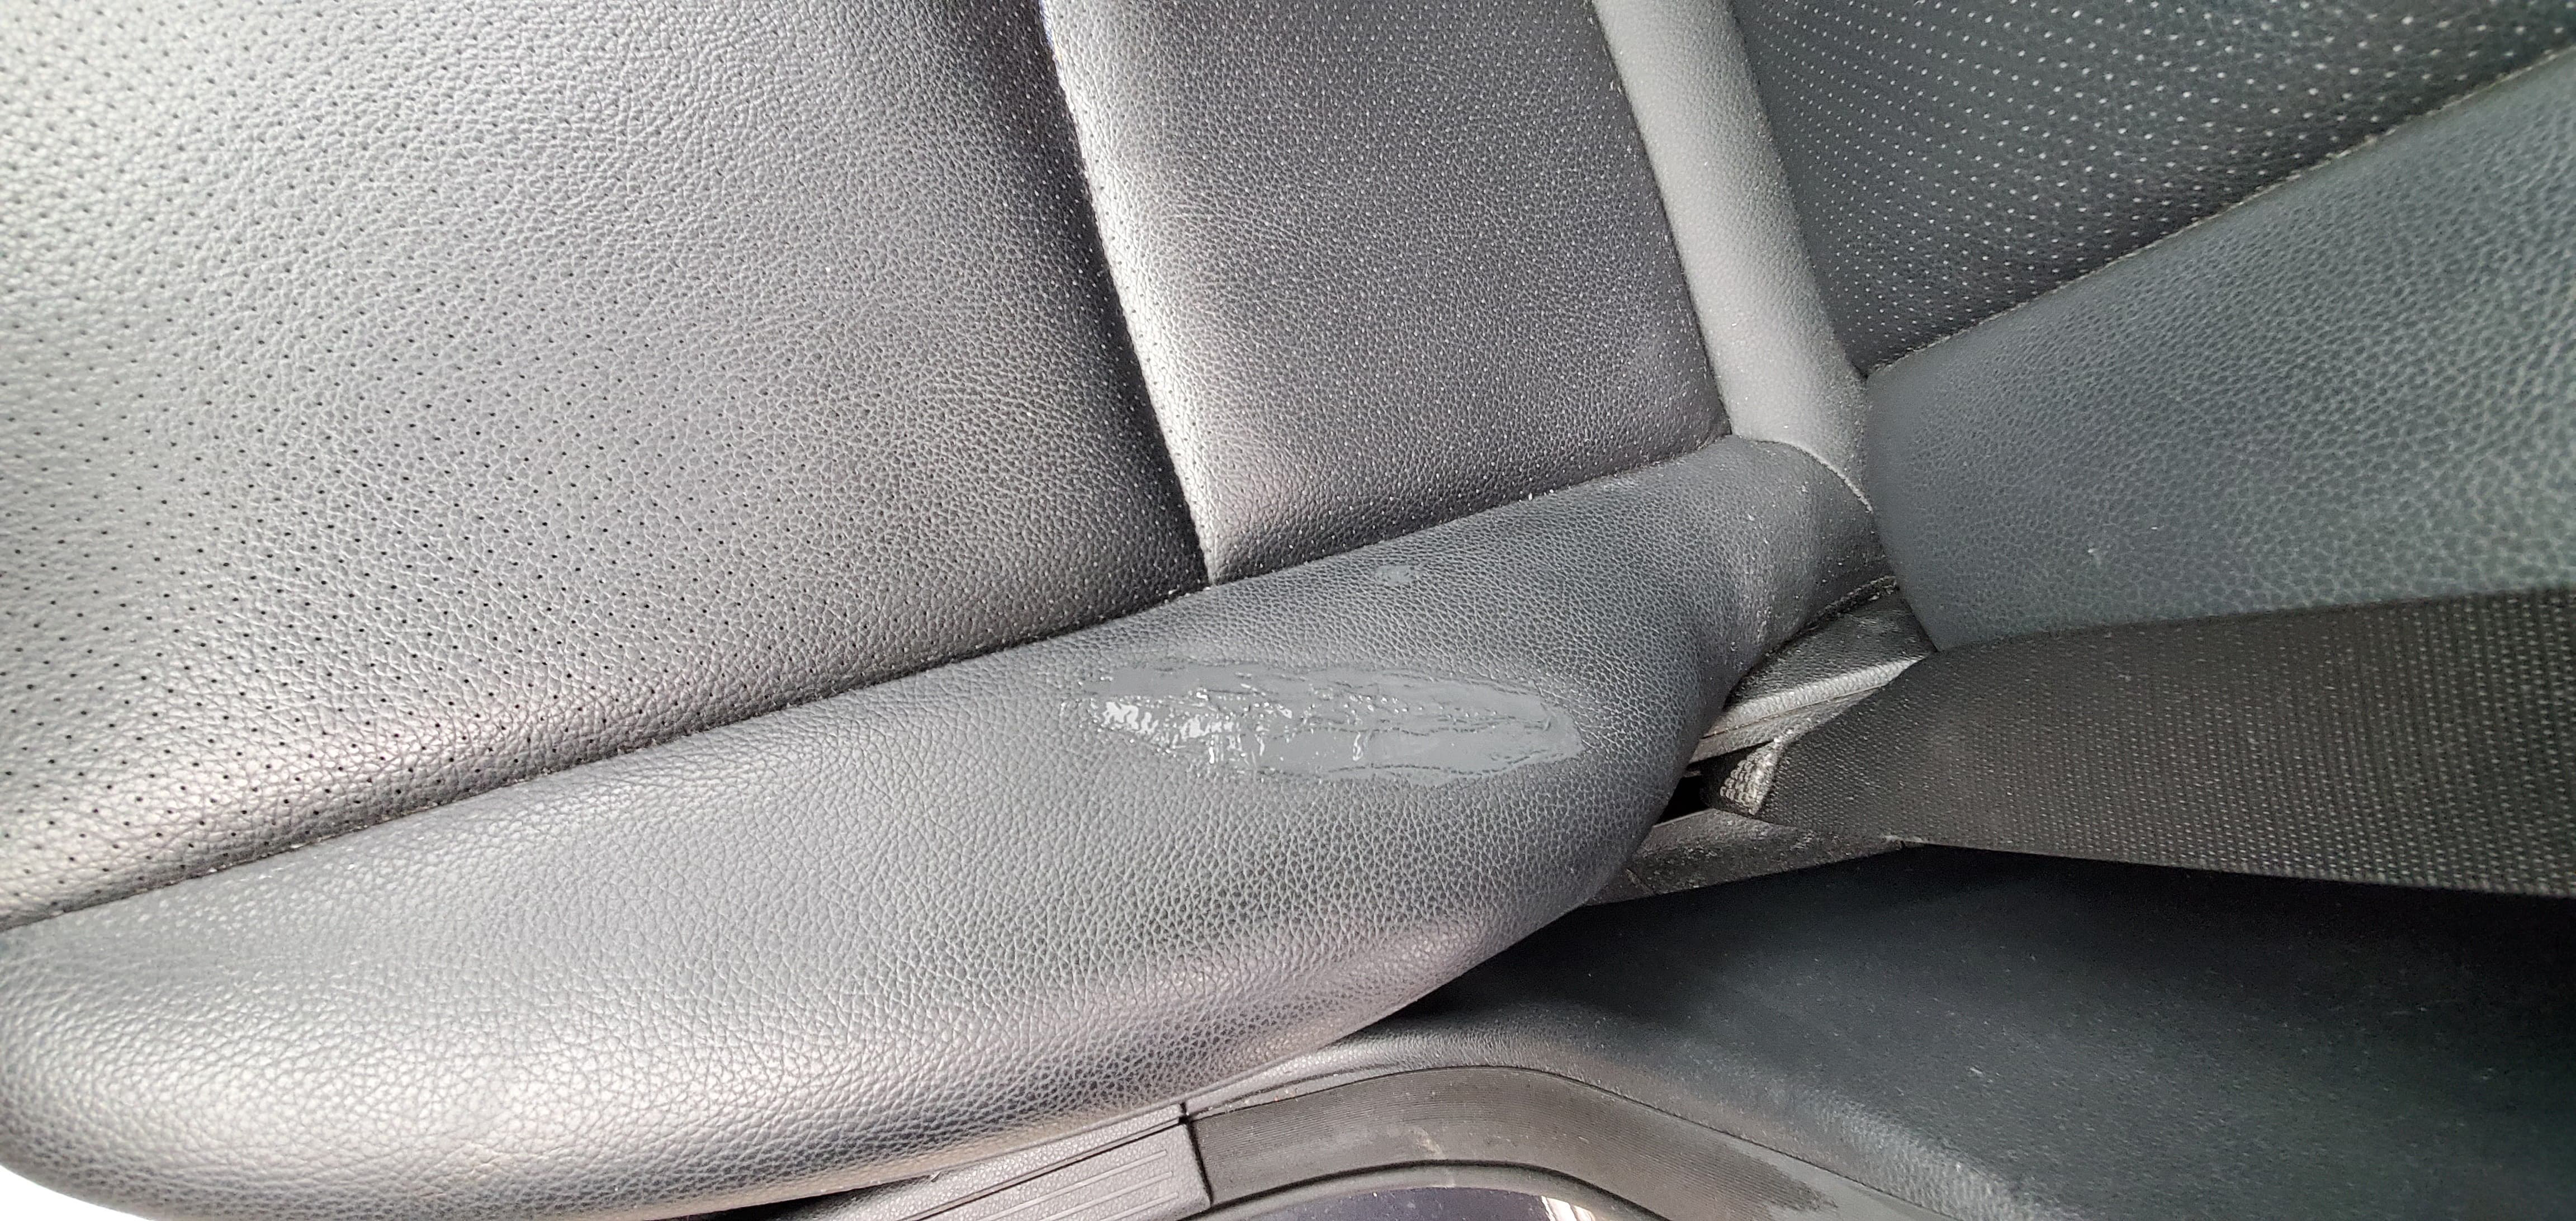 How To Repair A Leather Car Seat - Best Way To Repair Vinyl Car Seat